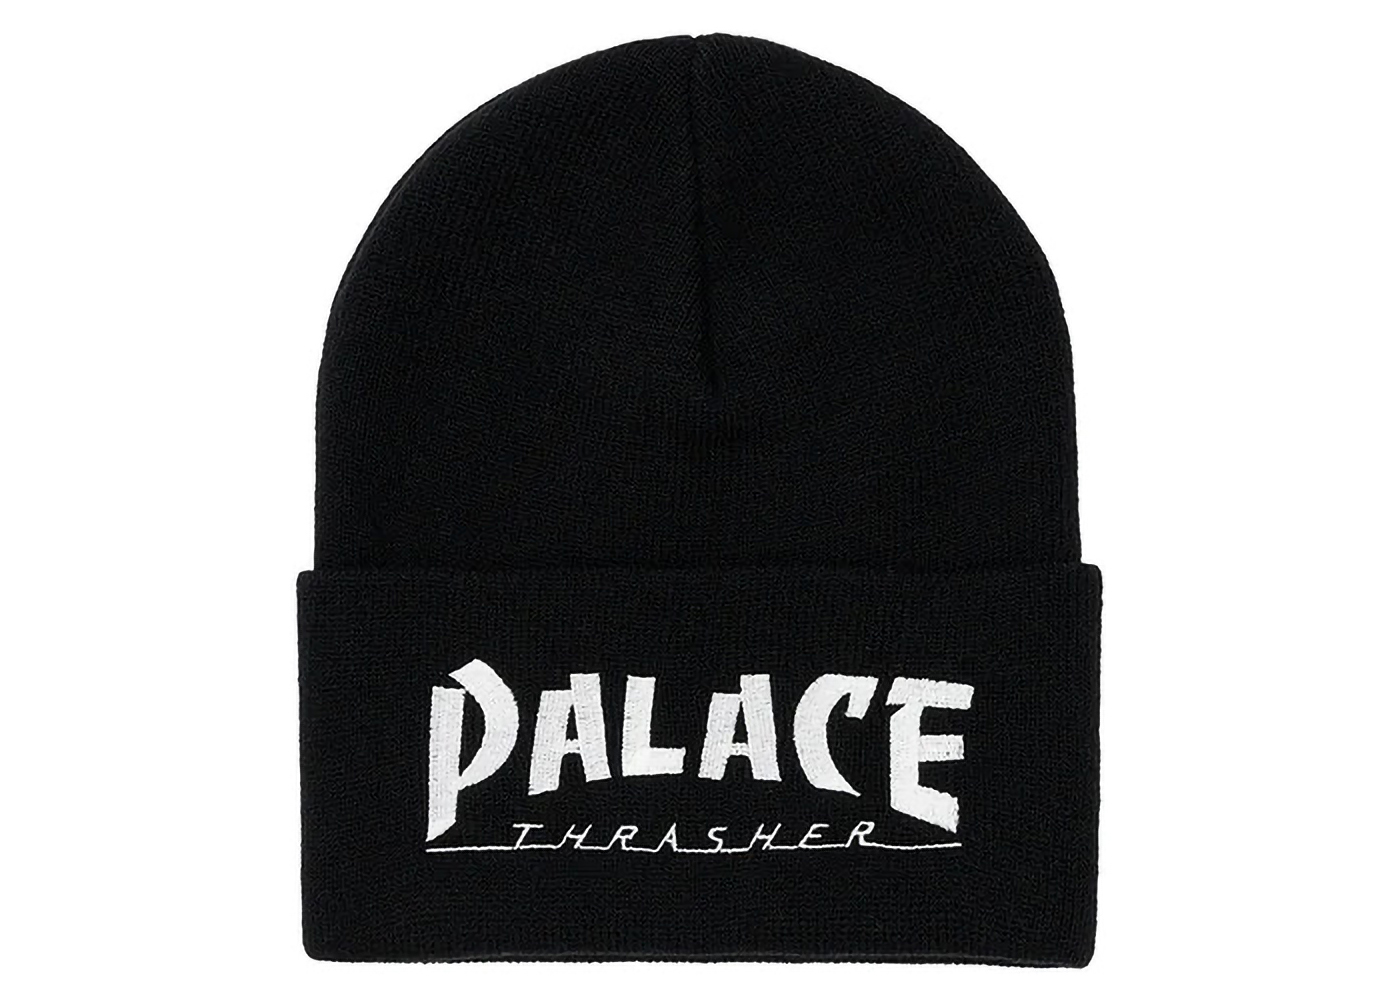 Palace x Thrasher Beanie Black